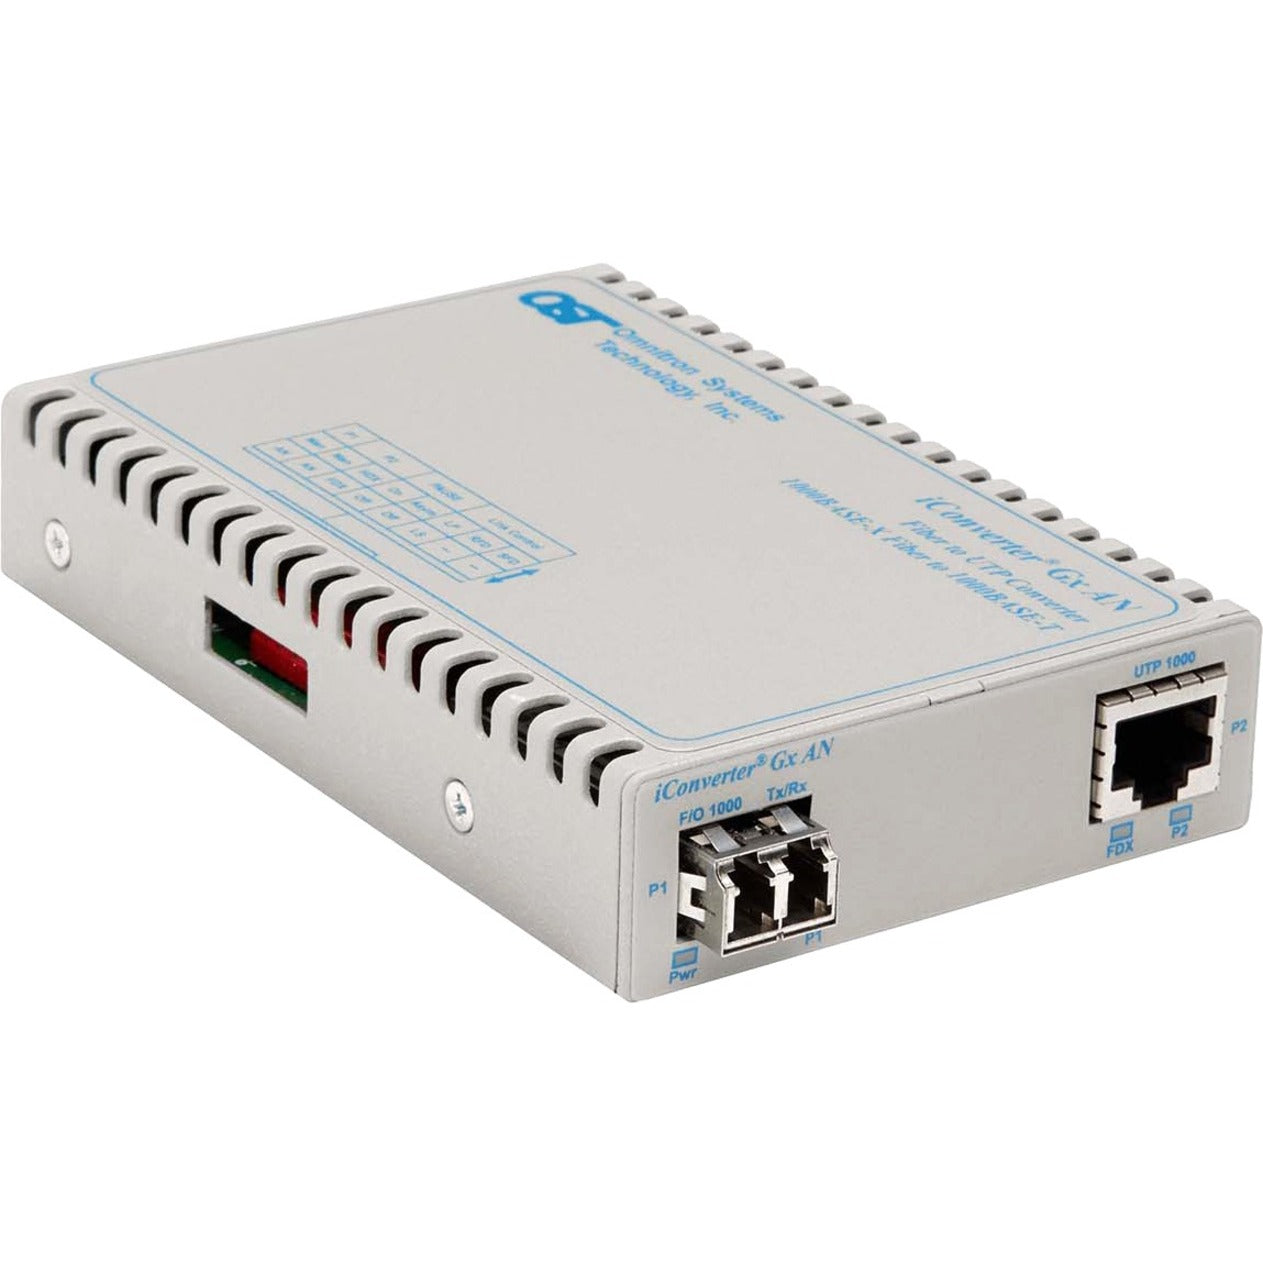 Omnitron Systems 8506N-0-A iConverter Gx AN LC Multimode 550m Standalone Transceiver/Media Converter, Gigabit Ethernet